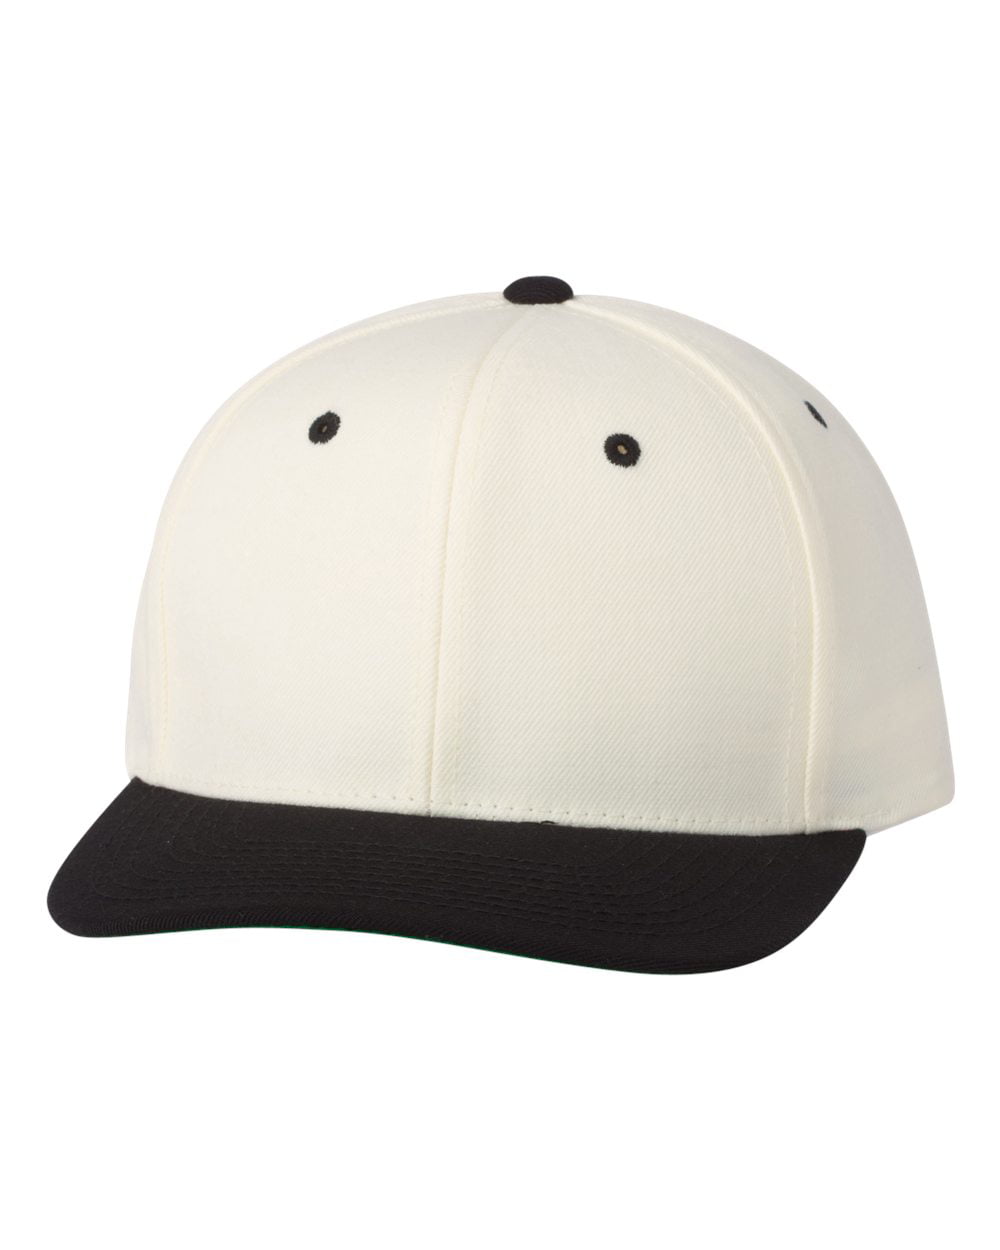 Black Baseball Hat Blank Structured Flat Bill Snapback Cap